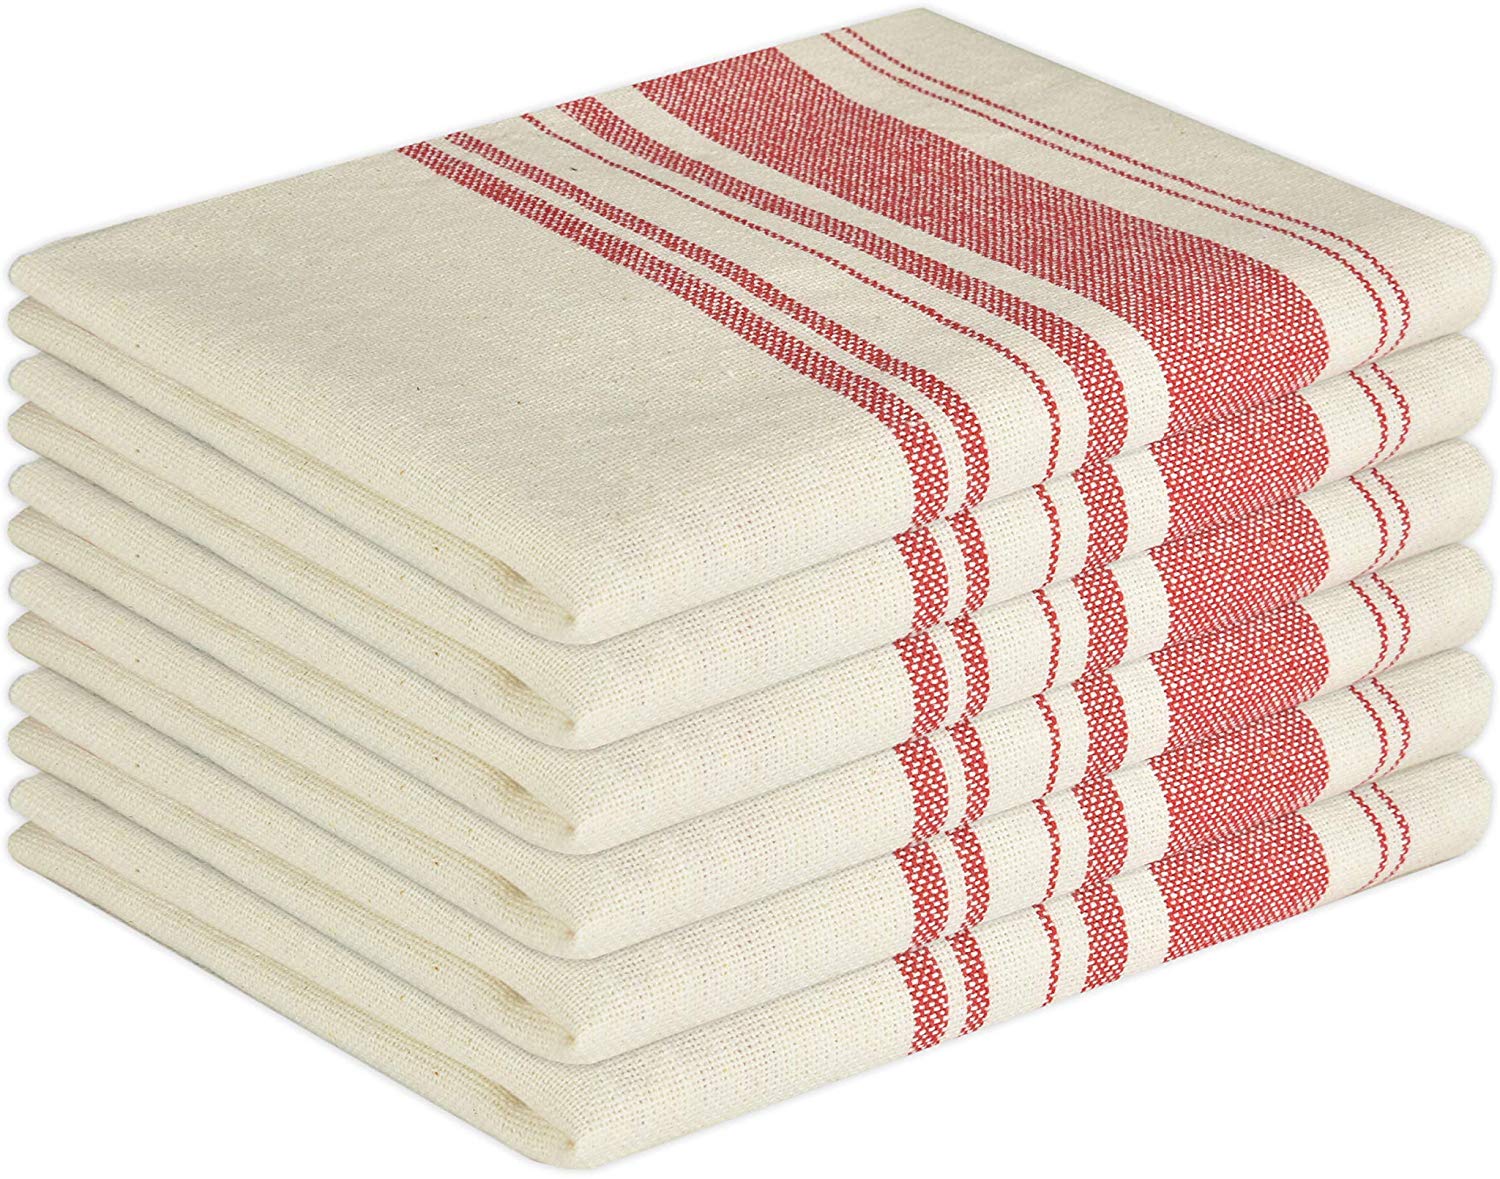 Glamburg Vintage Stripe Premium Cotton Kitchen Dish Towels 6-Pack 16x26  Red, With Hanging Loop